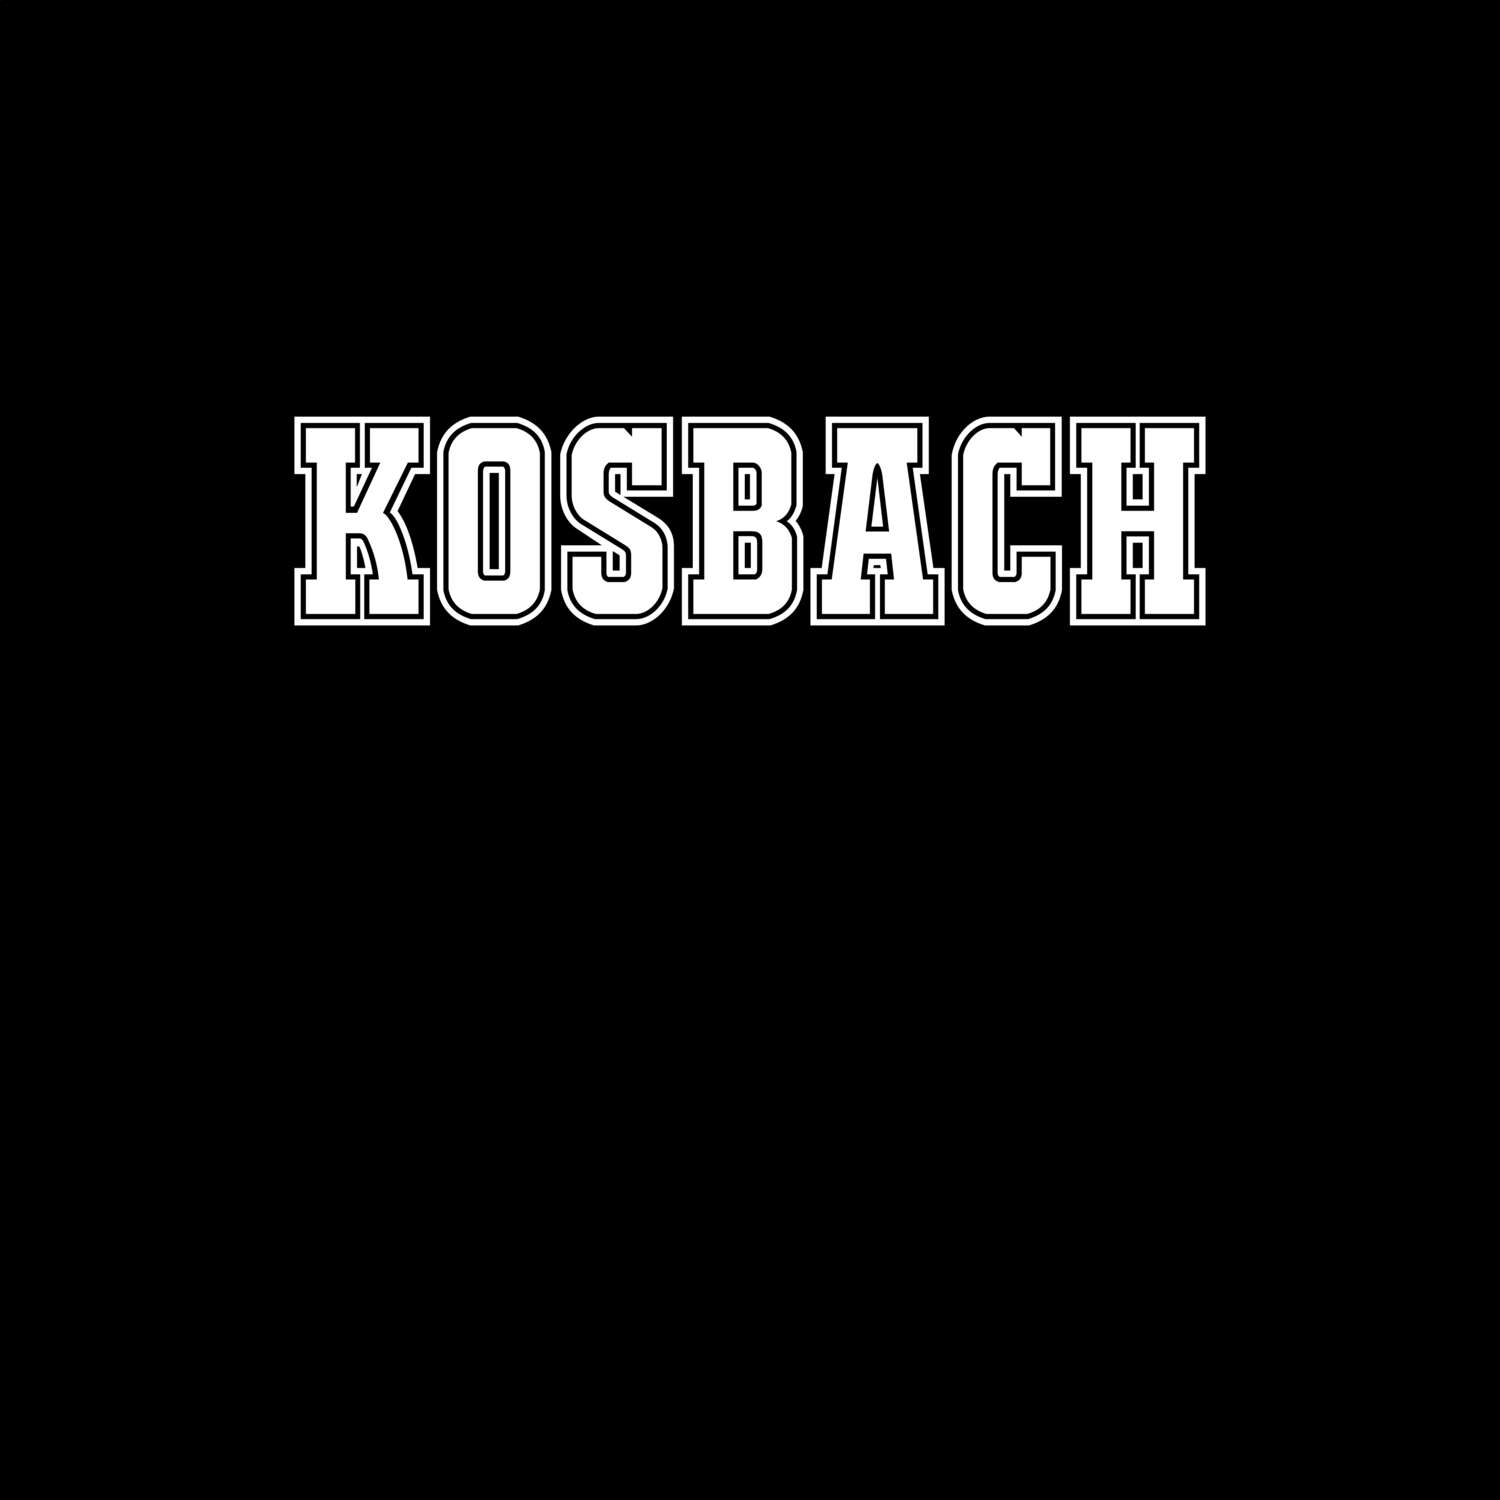 Kosbach T-Shirt »Classic«